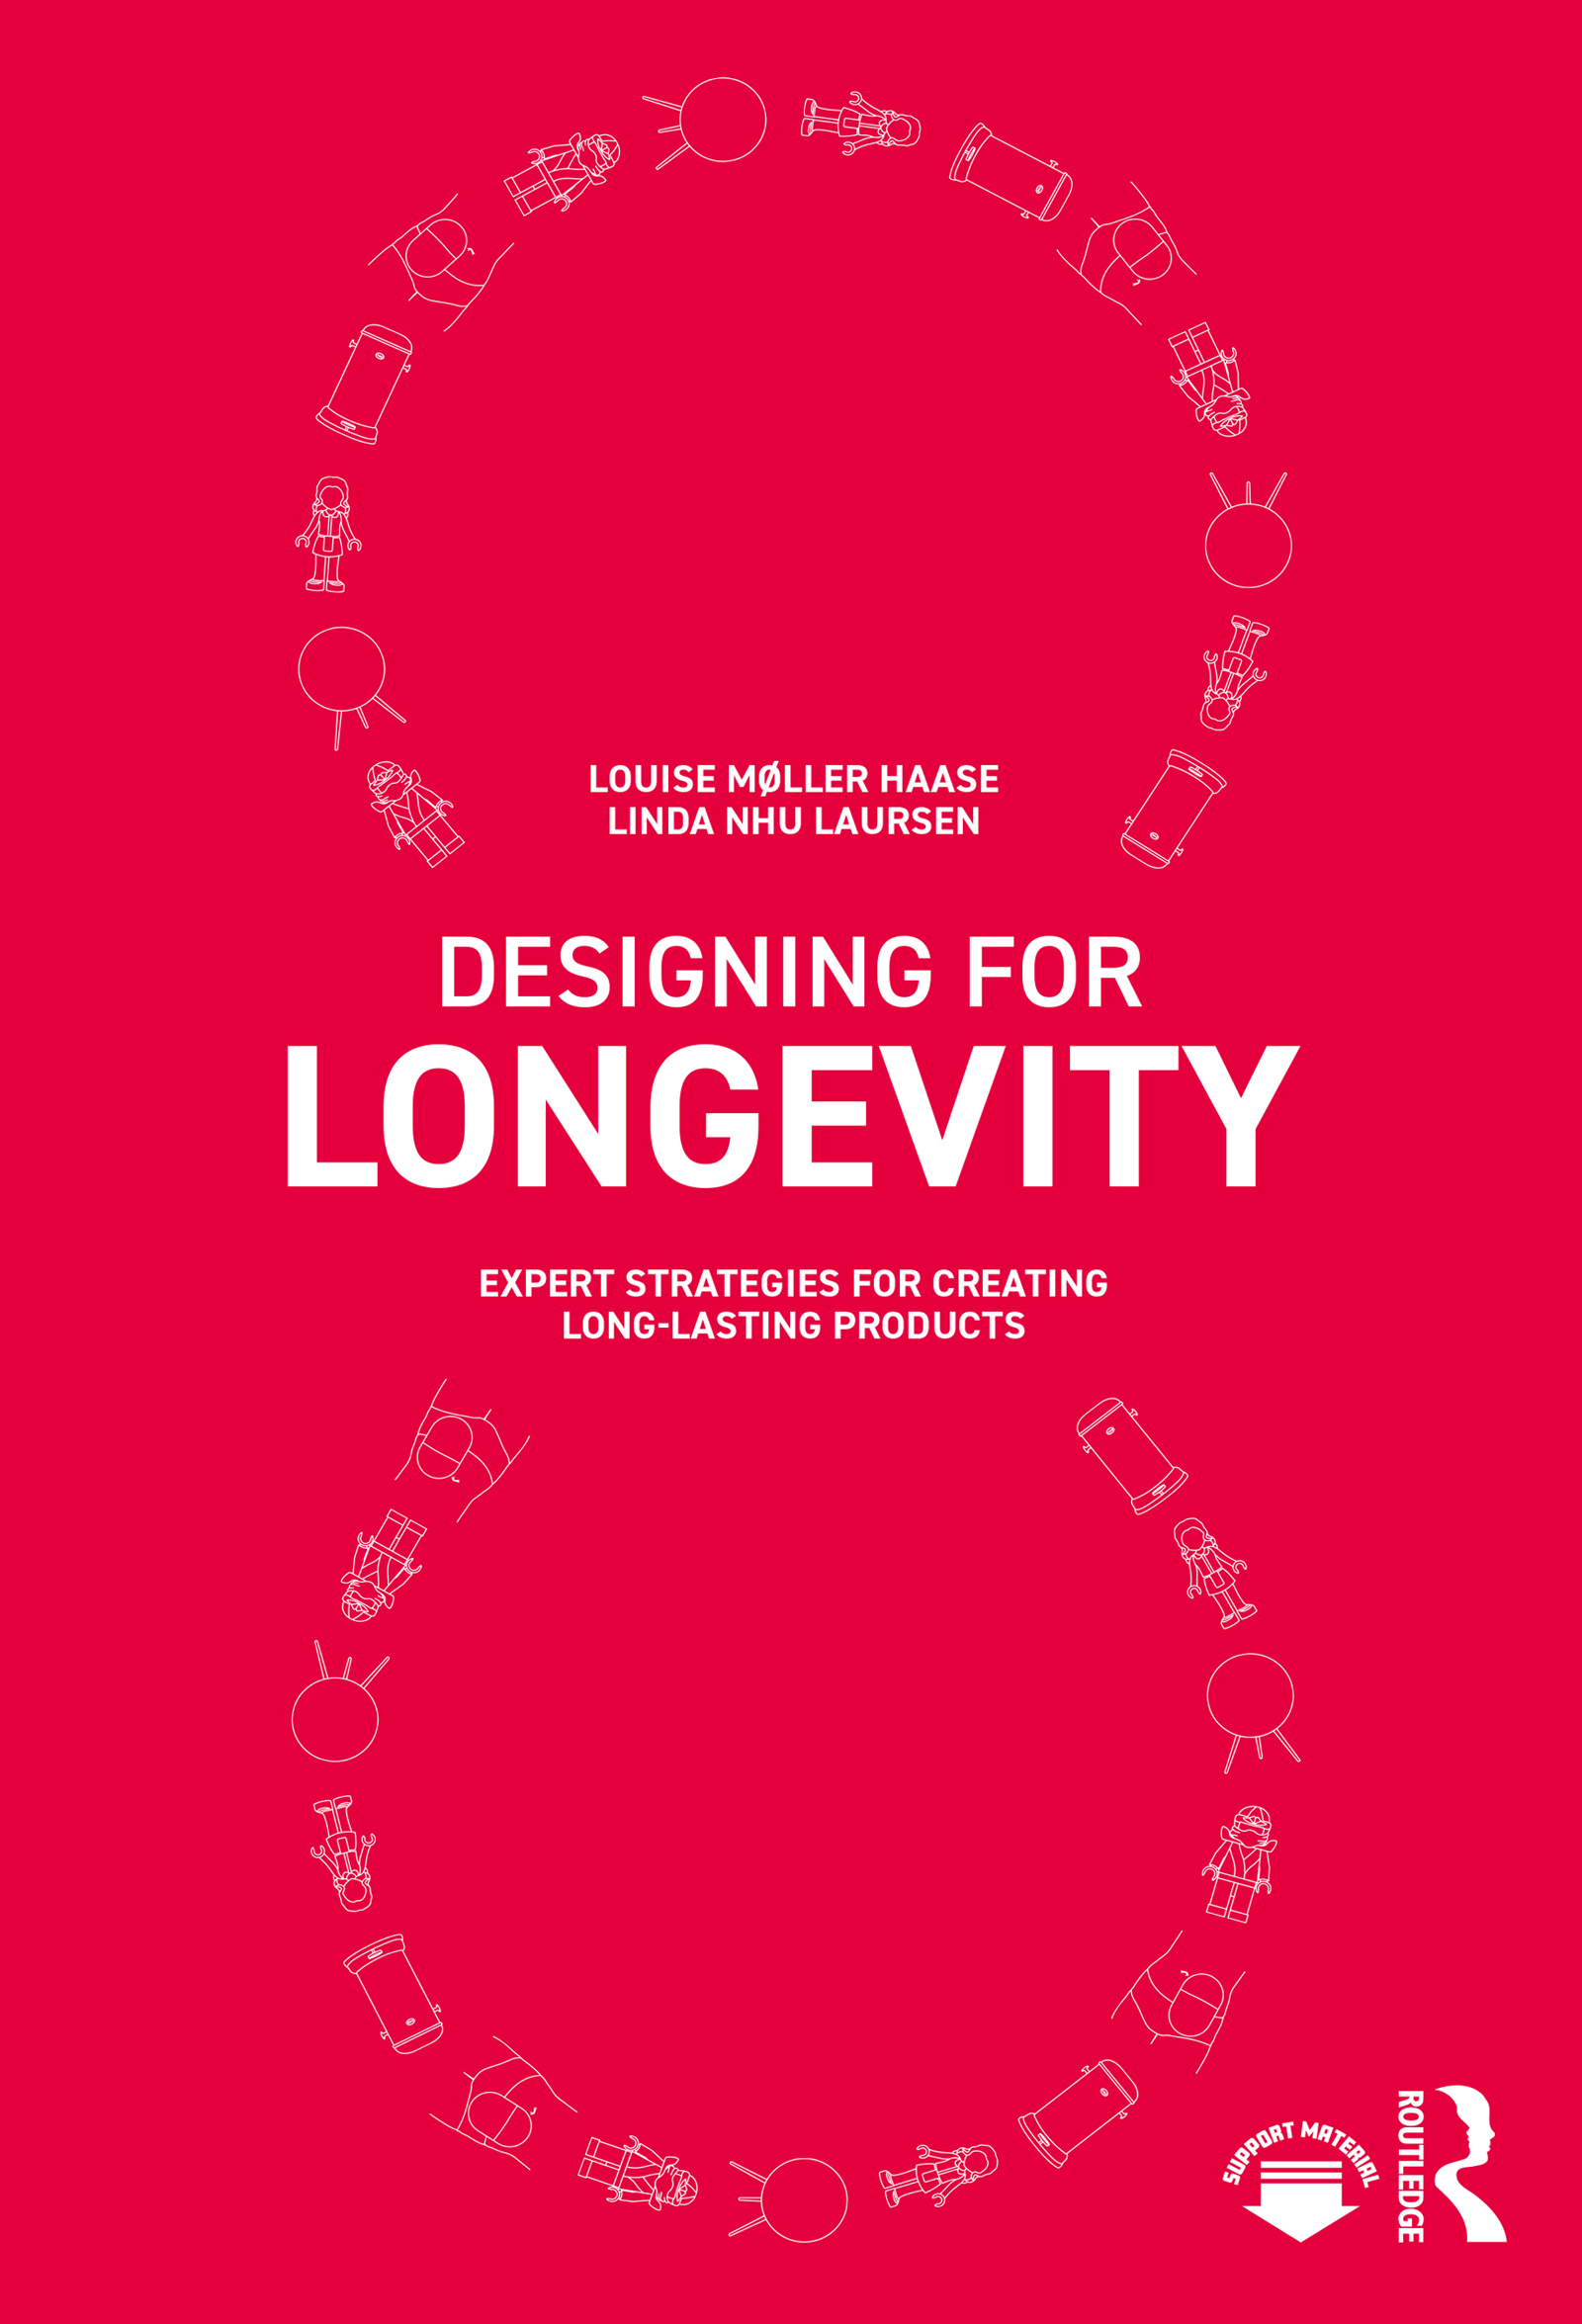 Designing for Longevity